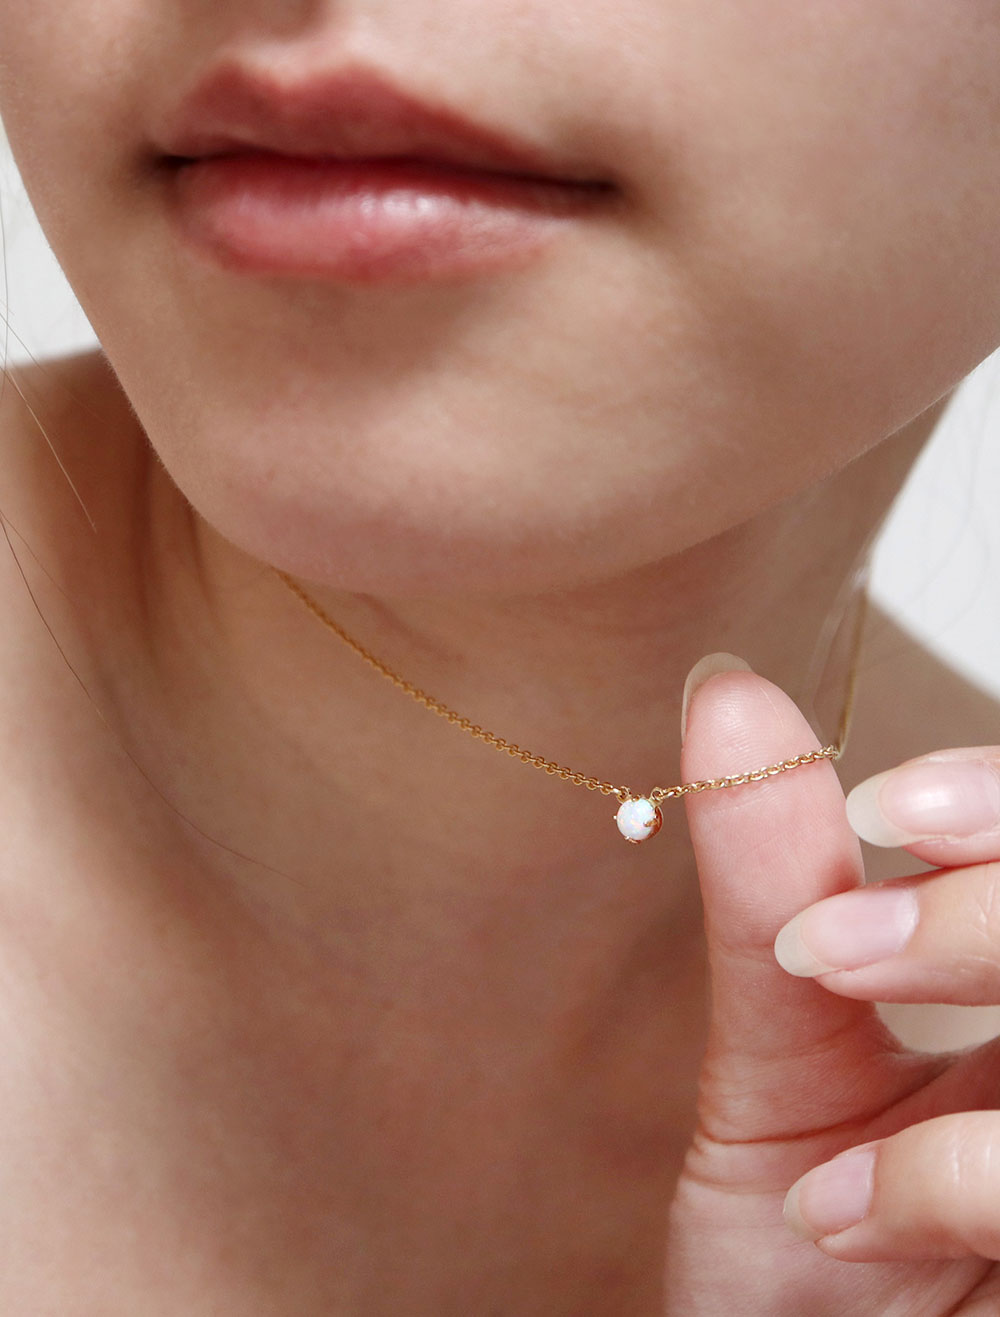 tiny opal necklace modelled up close